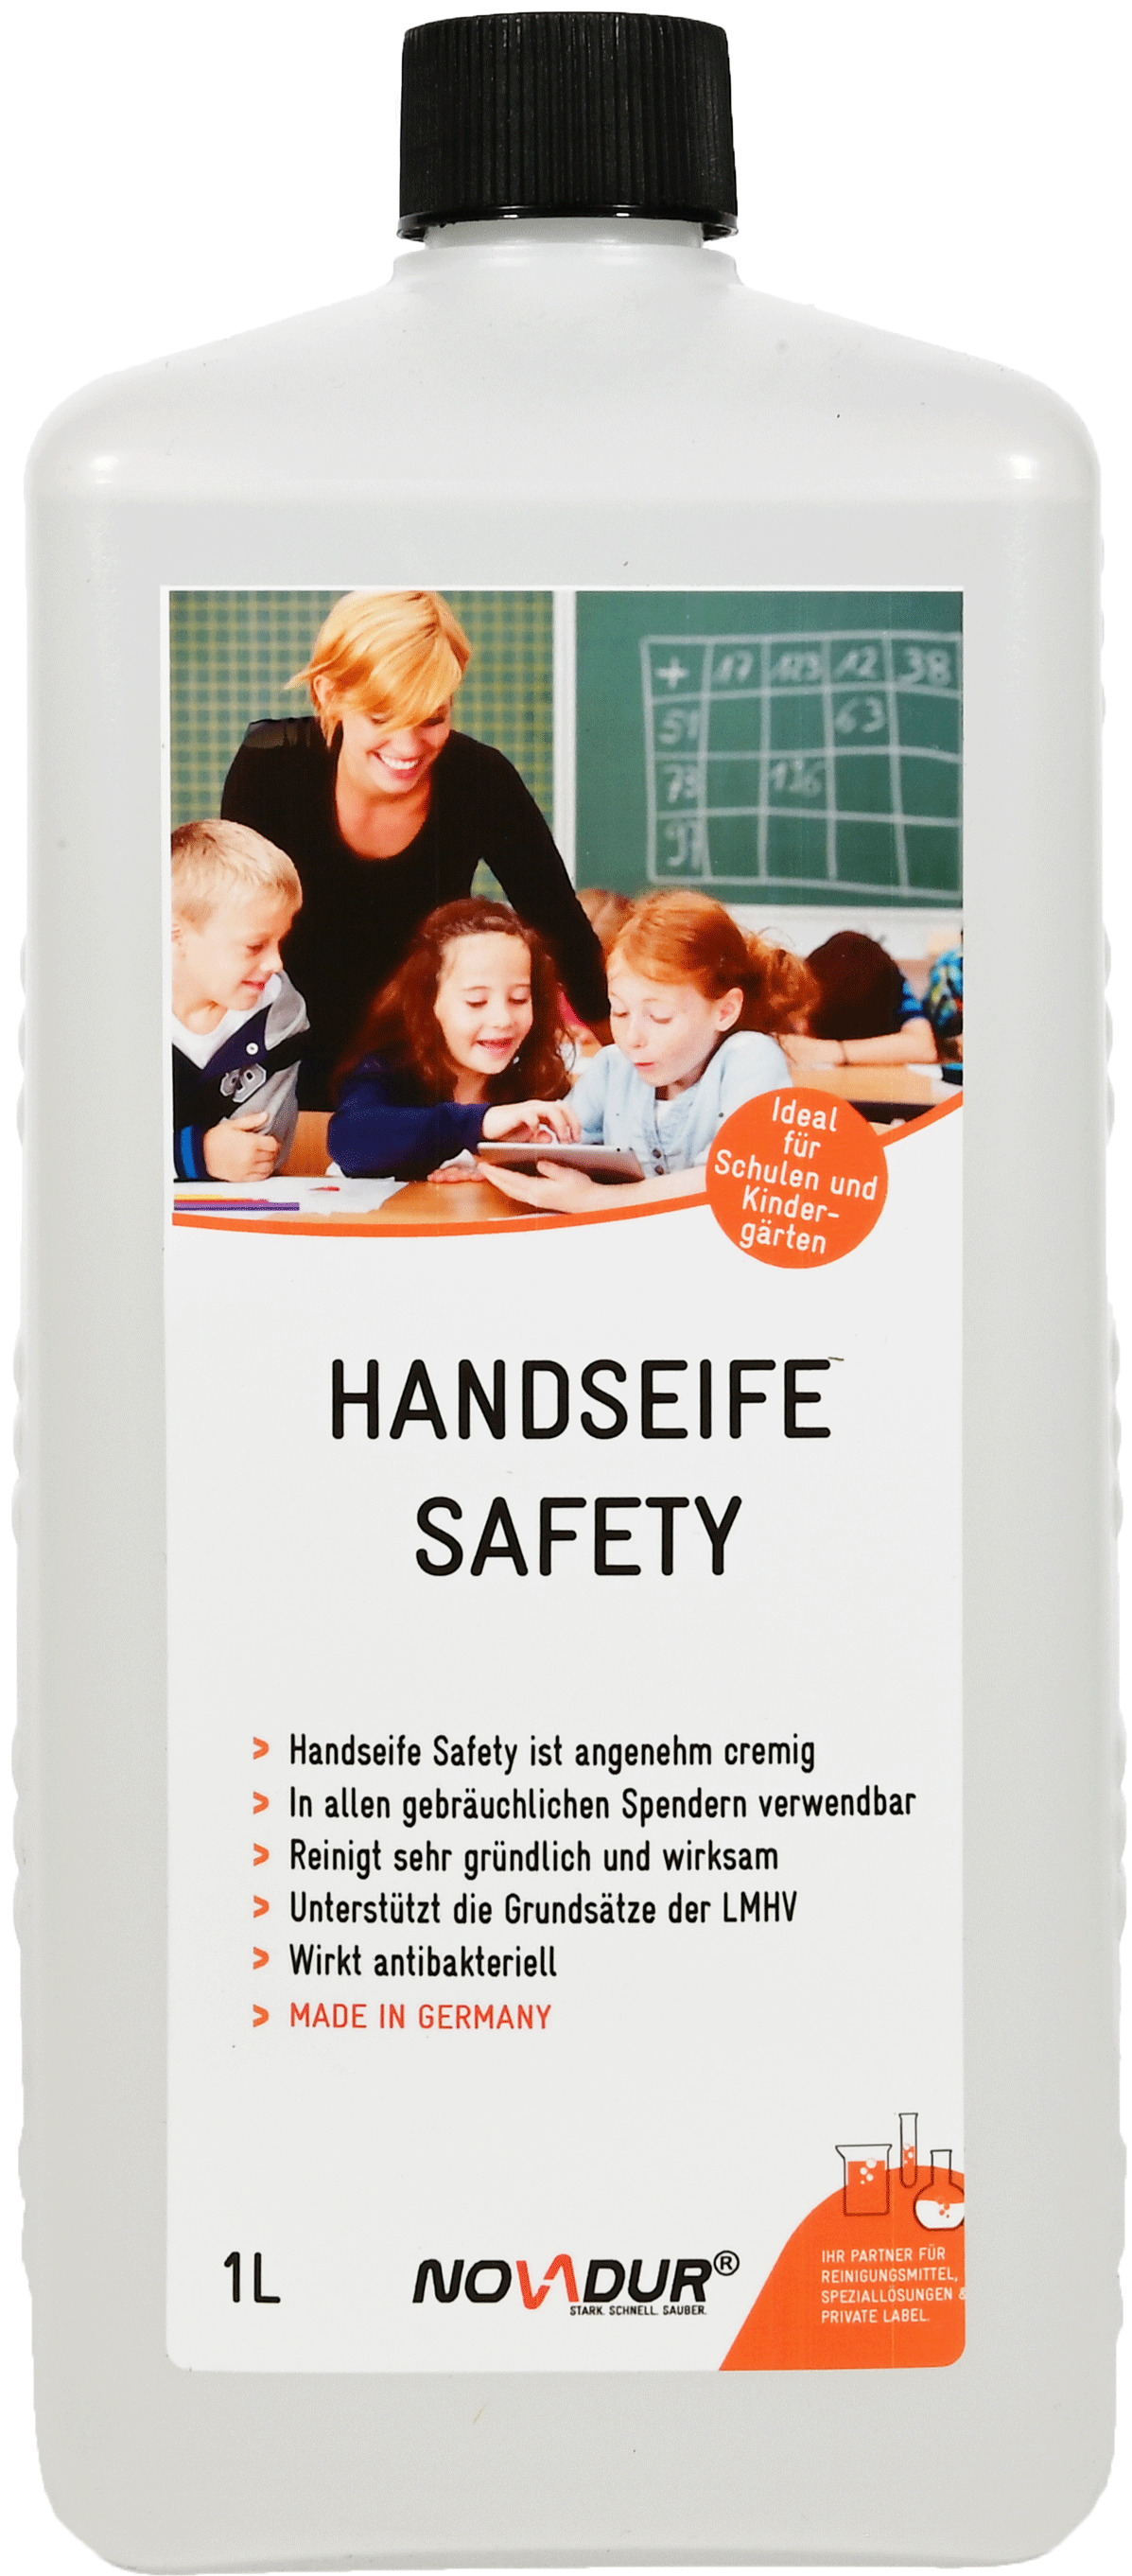 Handseife Safety